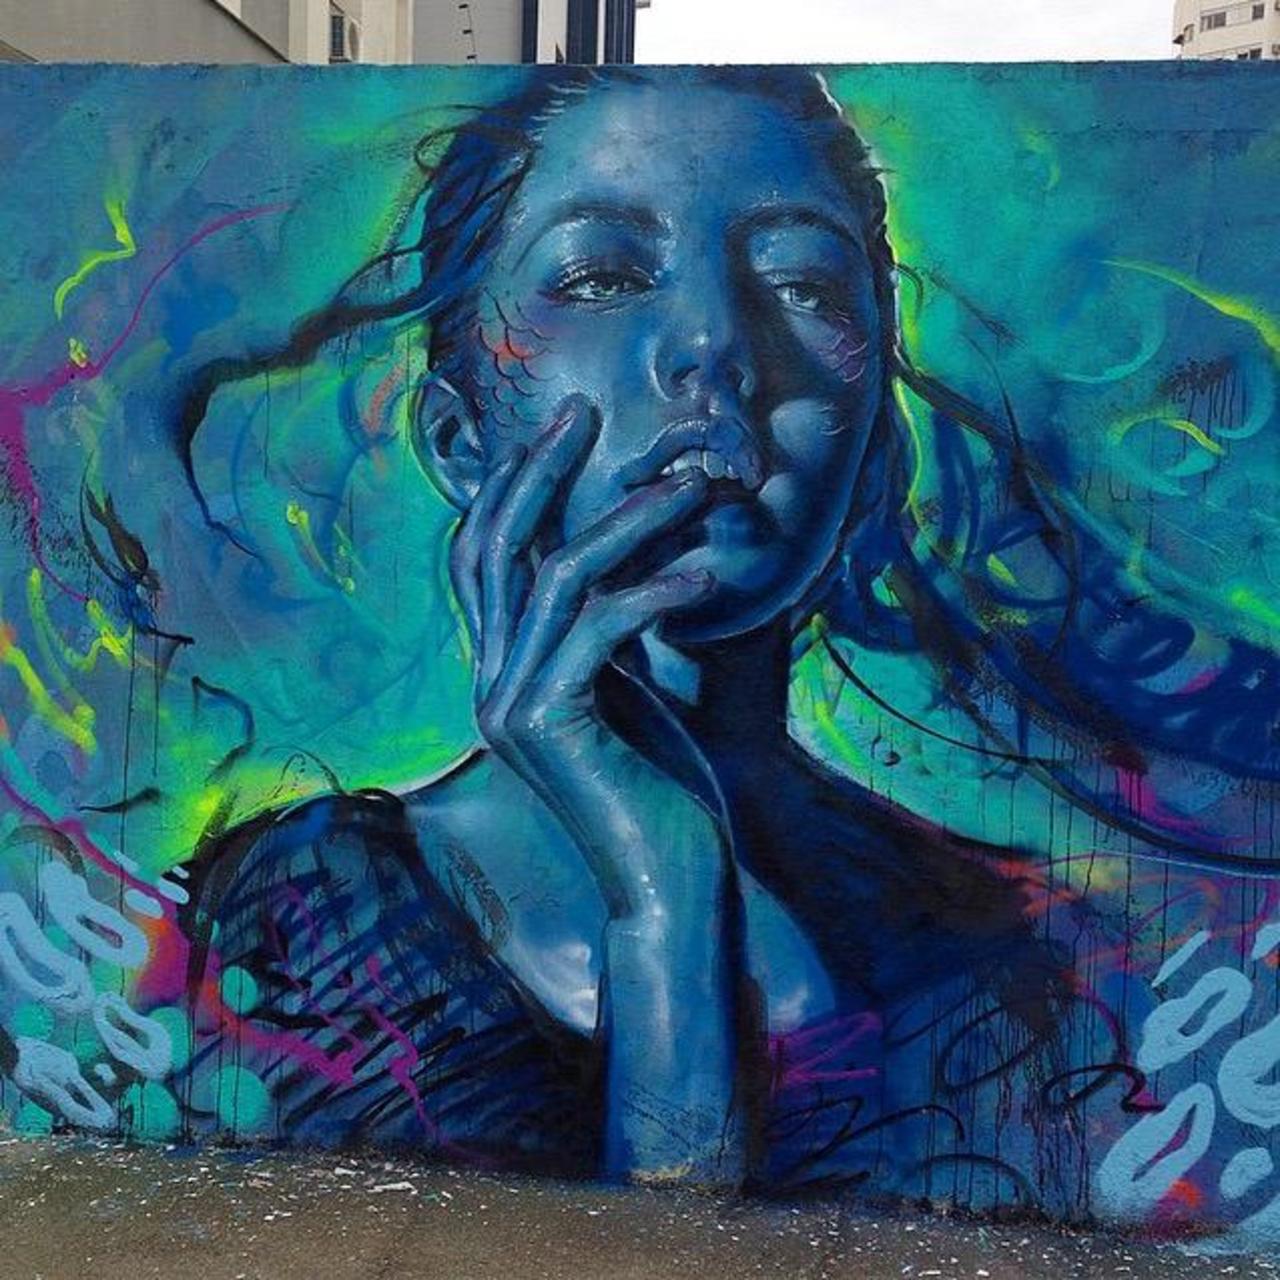 Thiago Valdi new Street Art piece titled 'Day Dreamer'

#art #mural #graffiti #streetart http://t.co/Hg7d4EyW0k